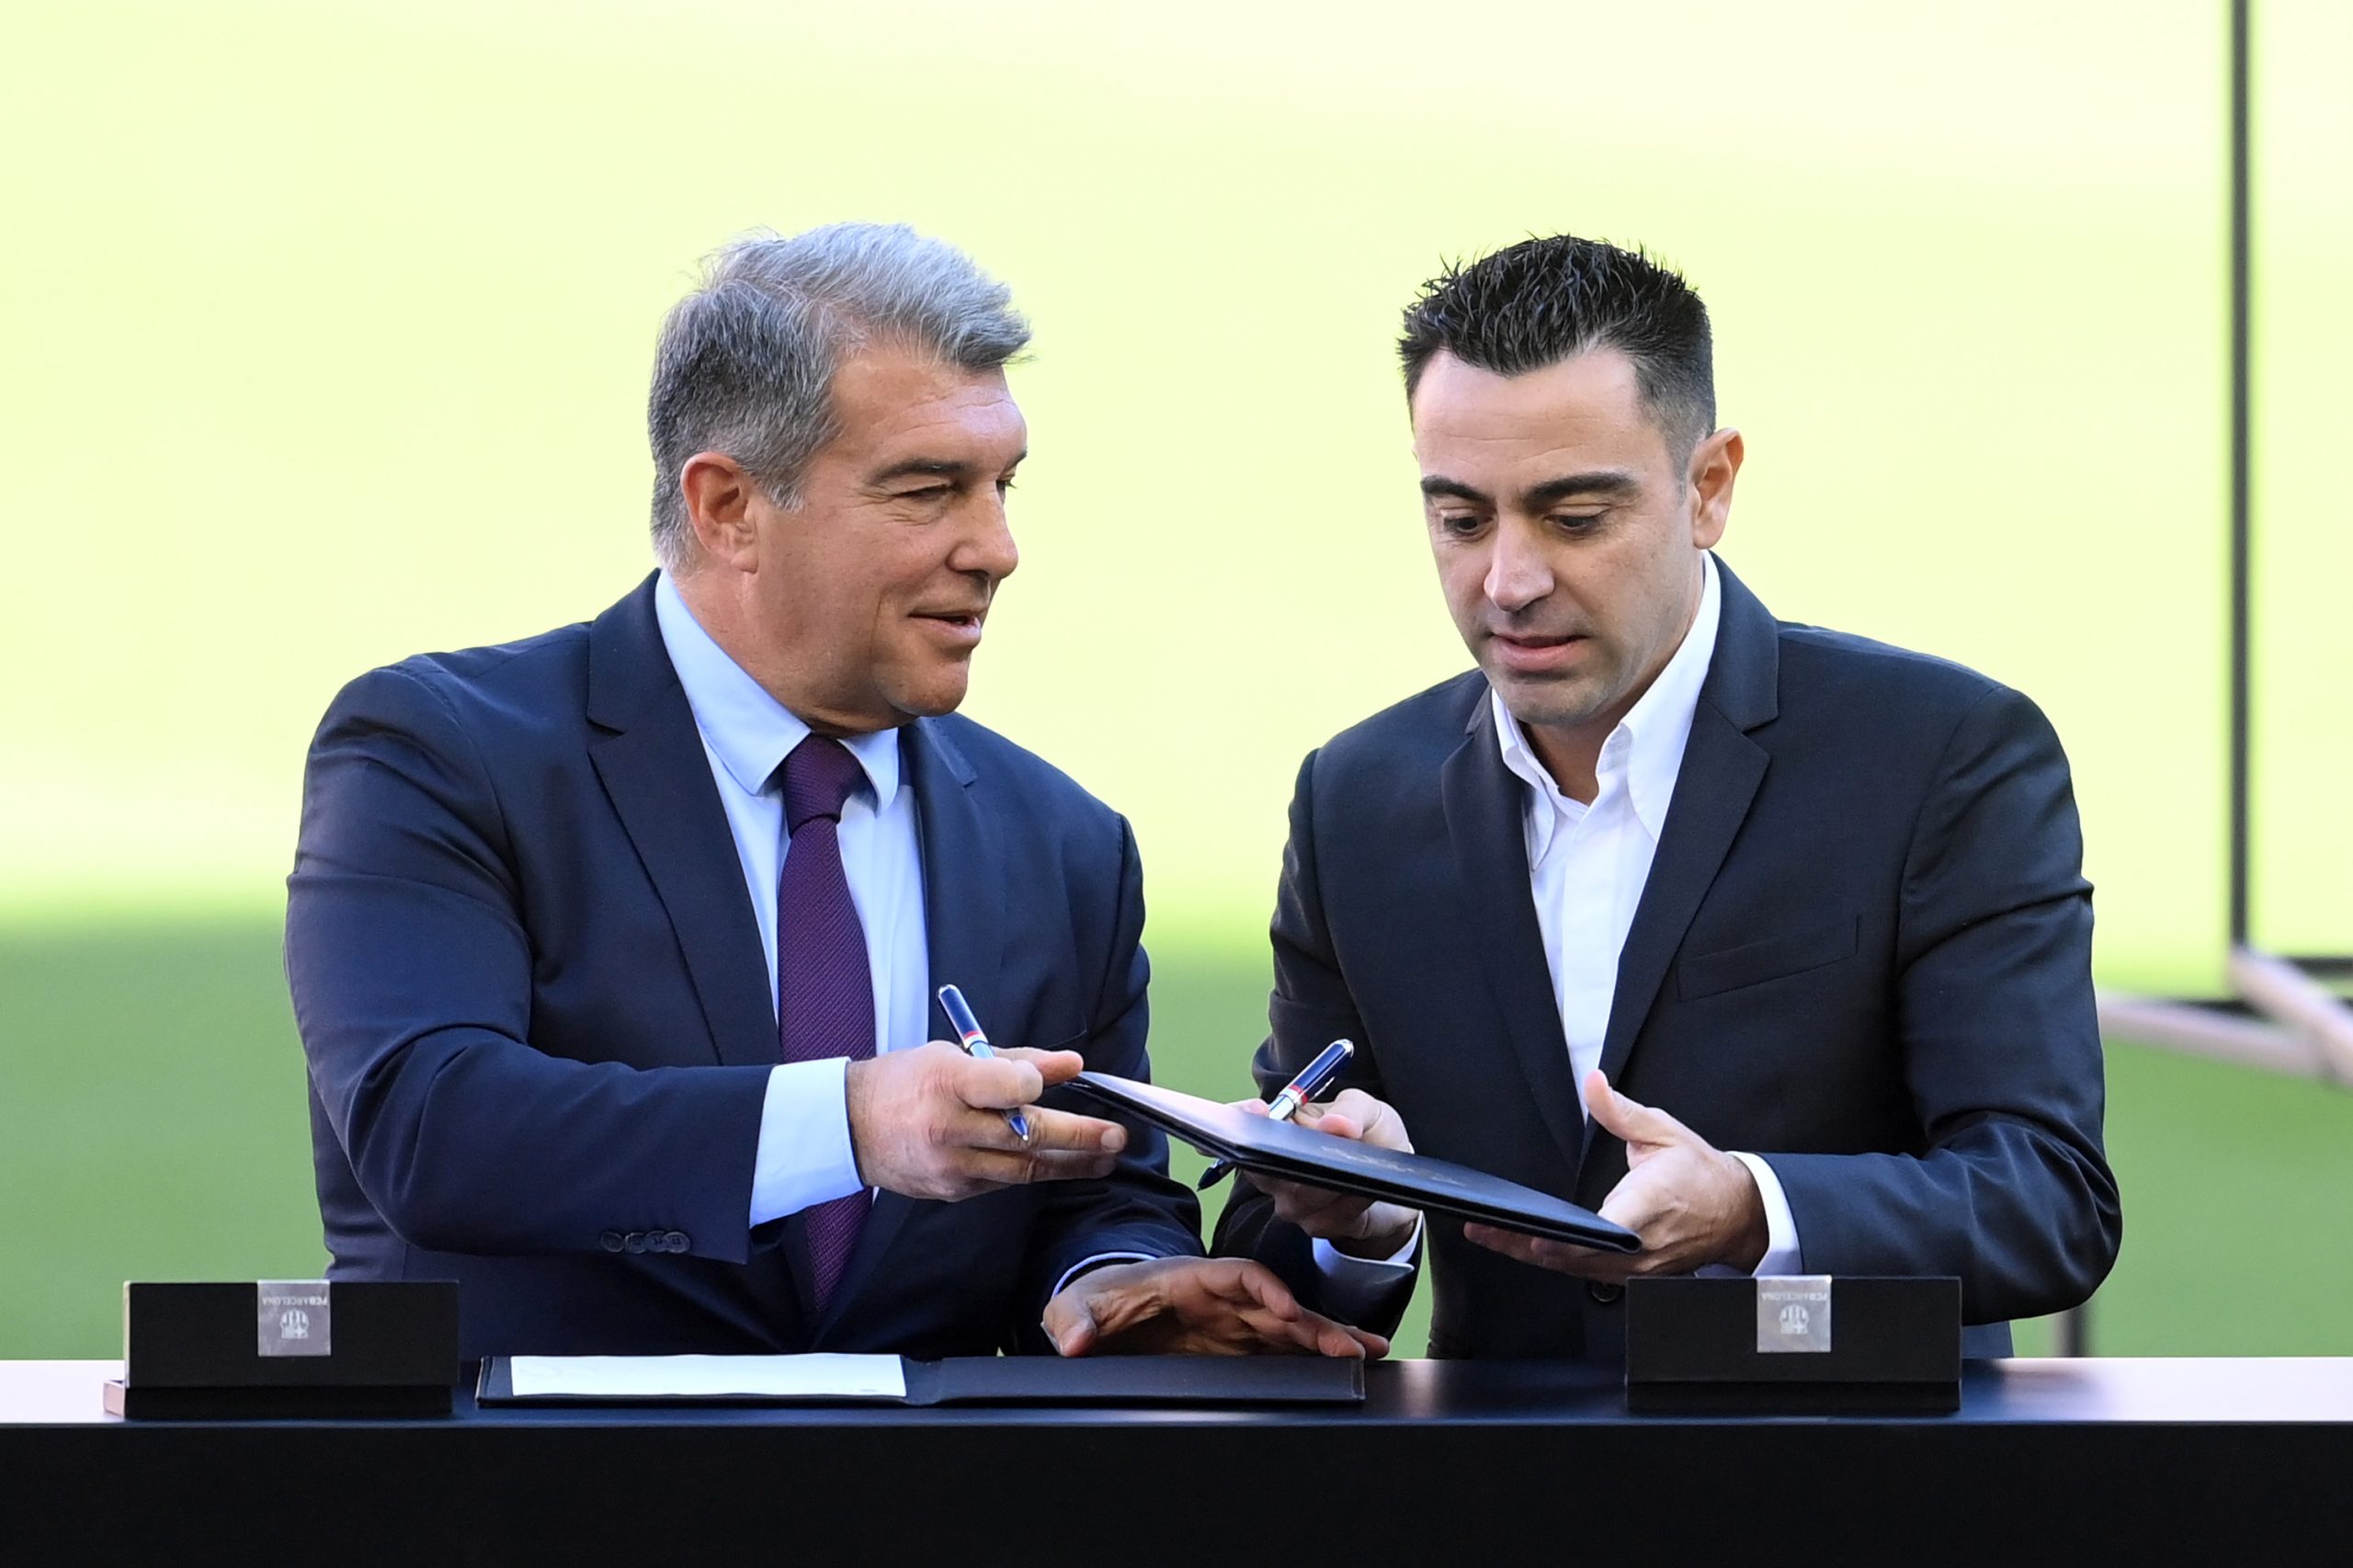 xavi hernandez unveiled as new fc barcelona fc head coach scaled 1